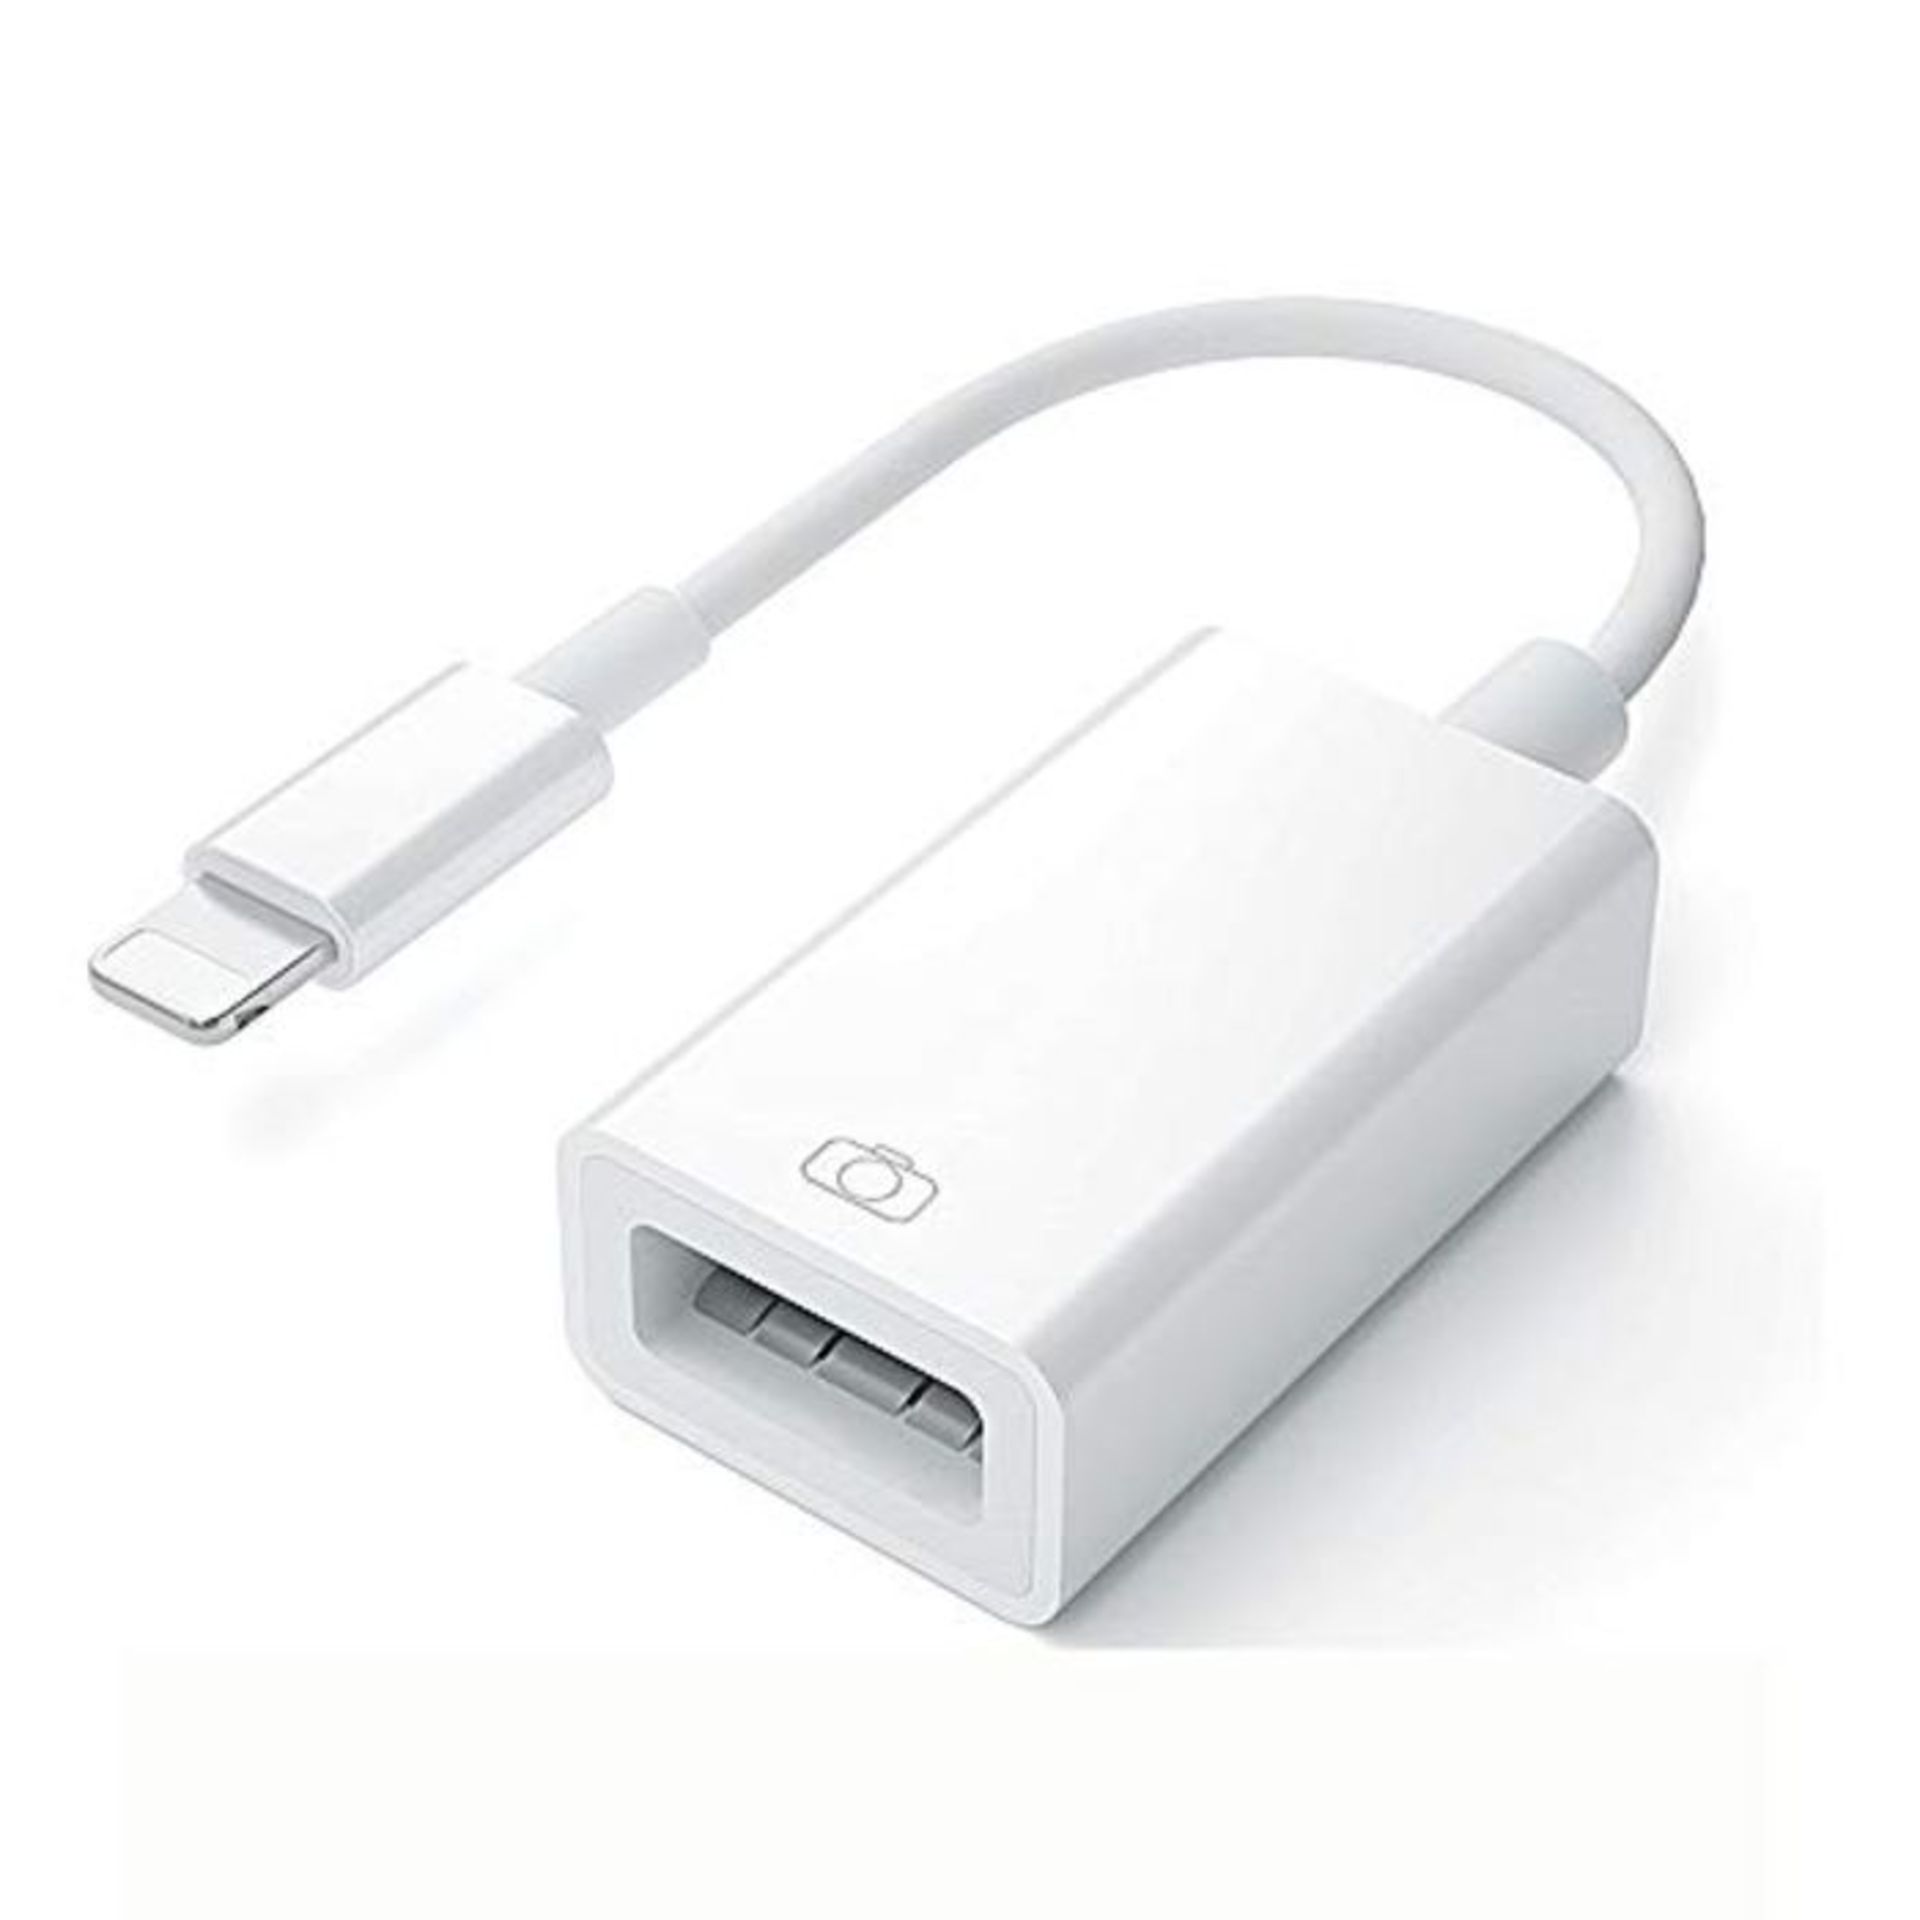 USB Camera Adapter, Upgrade USB 2.0 OTG Cable adapter Lightning to USB Female Adapter